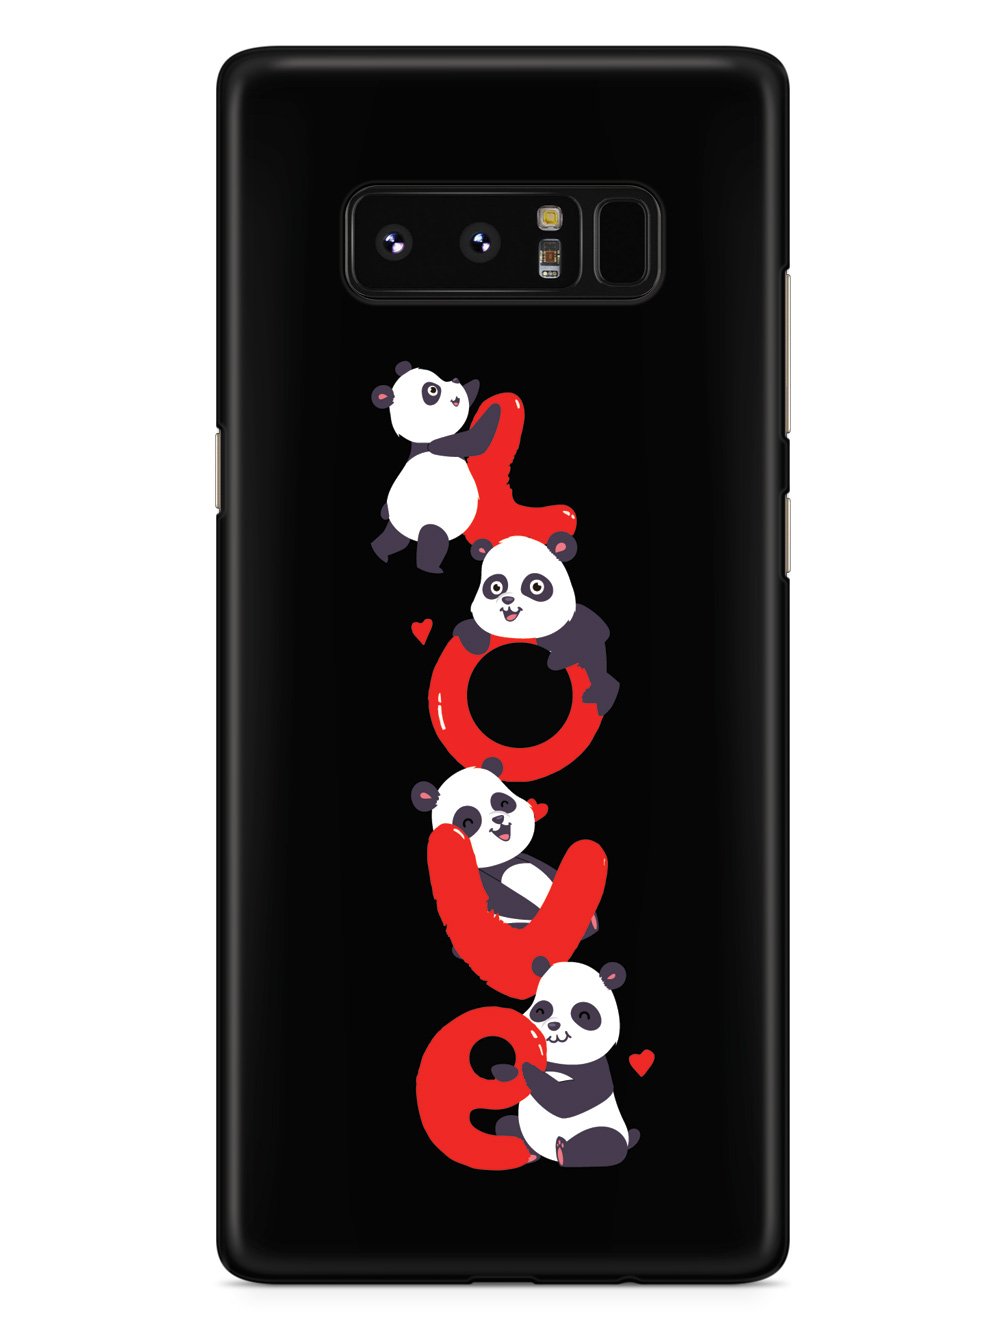 Panda Love - Black Case